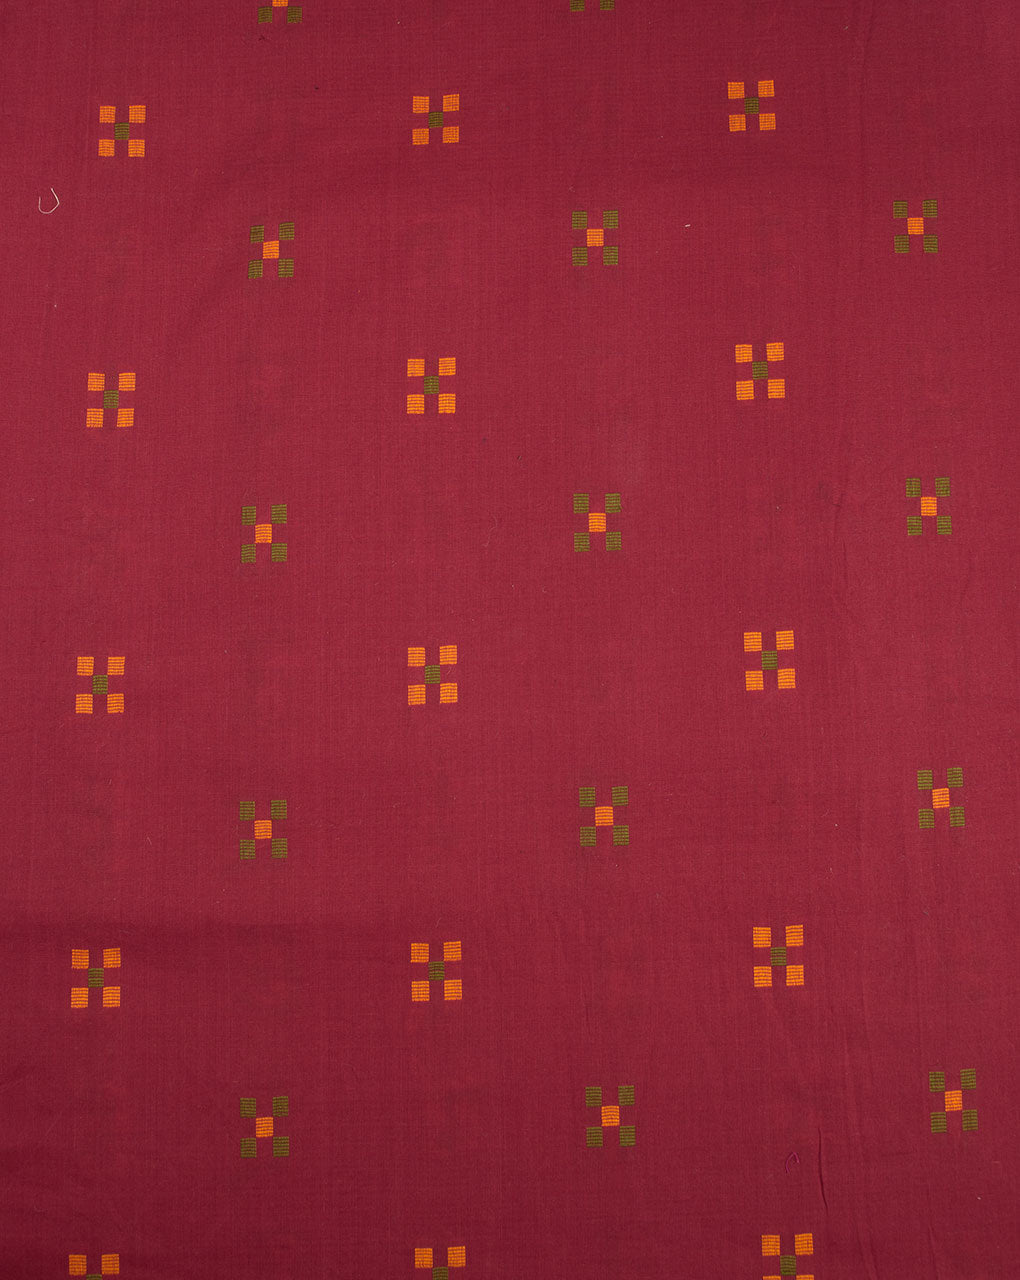 Geometric Jacquard Loom Textured Cotton Fabric - Fabriclore.com